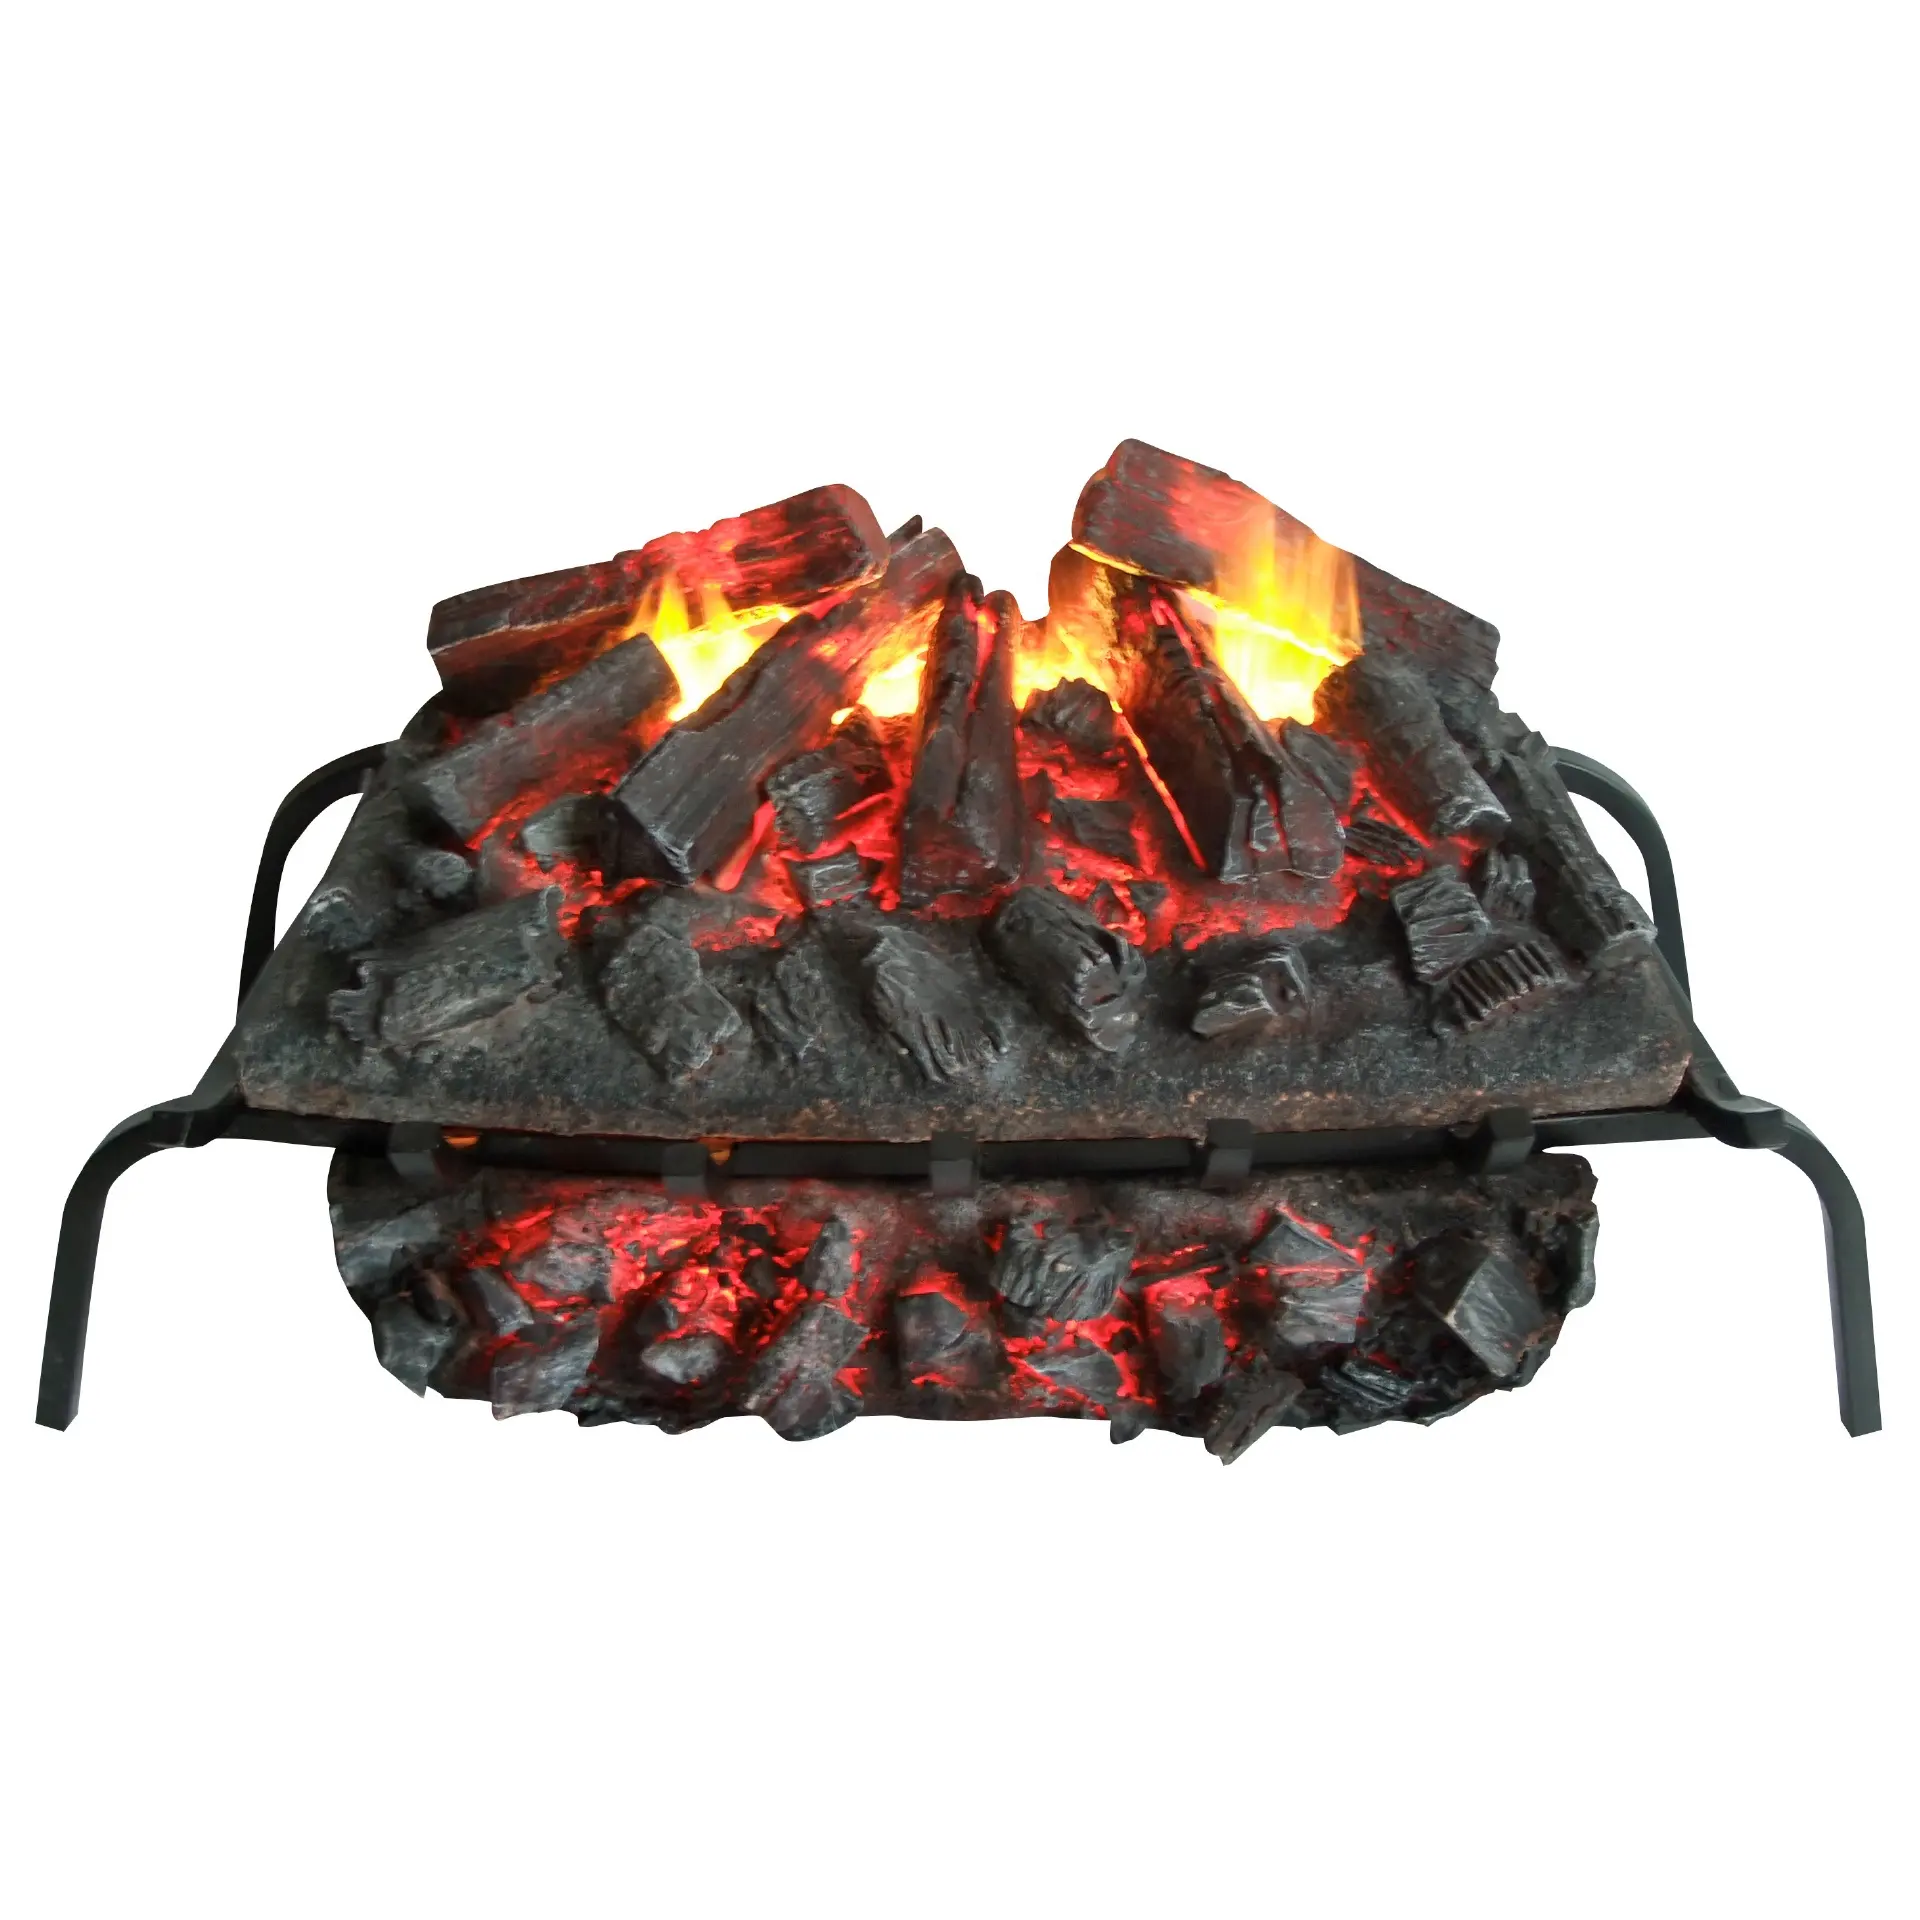 Water Vapor Fire Steam Electric Fireplace Steam Flame Effect Log Set Design for Home Decoration Silva Log